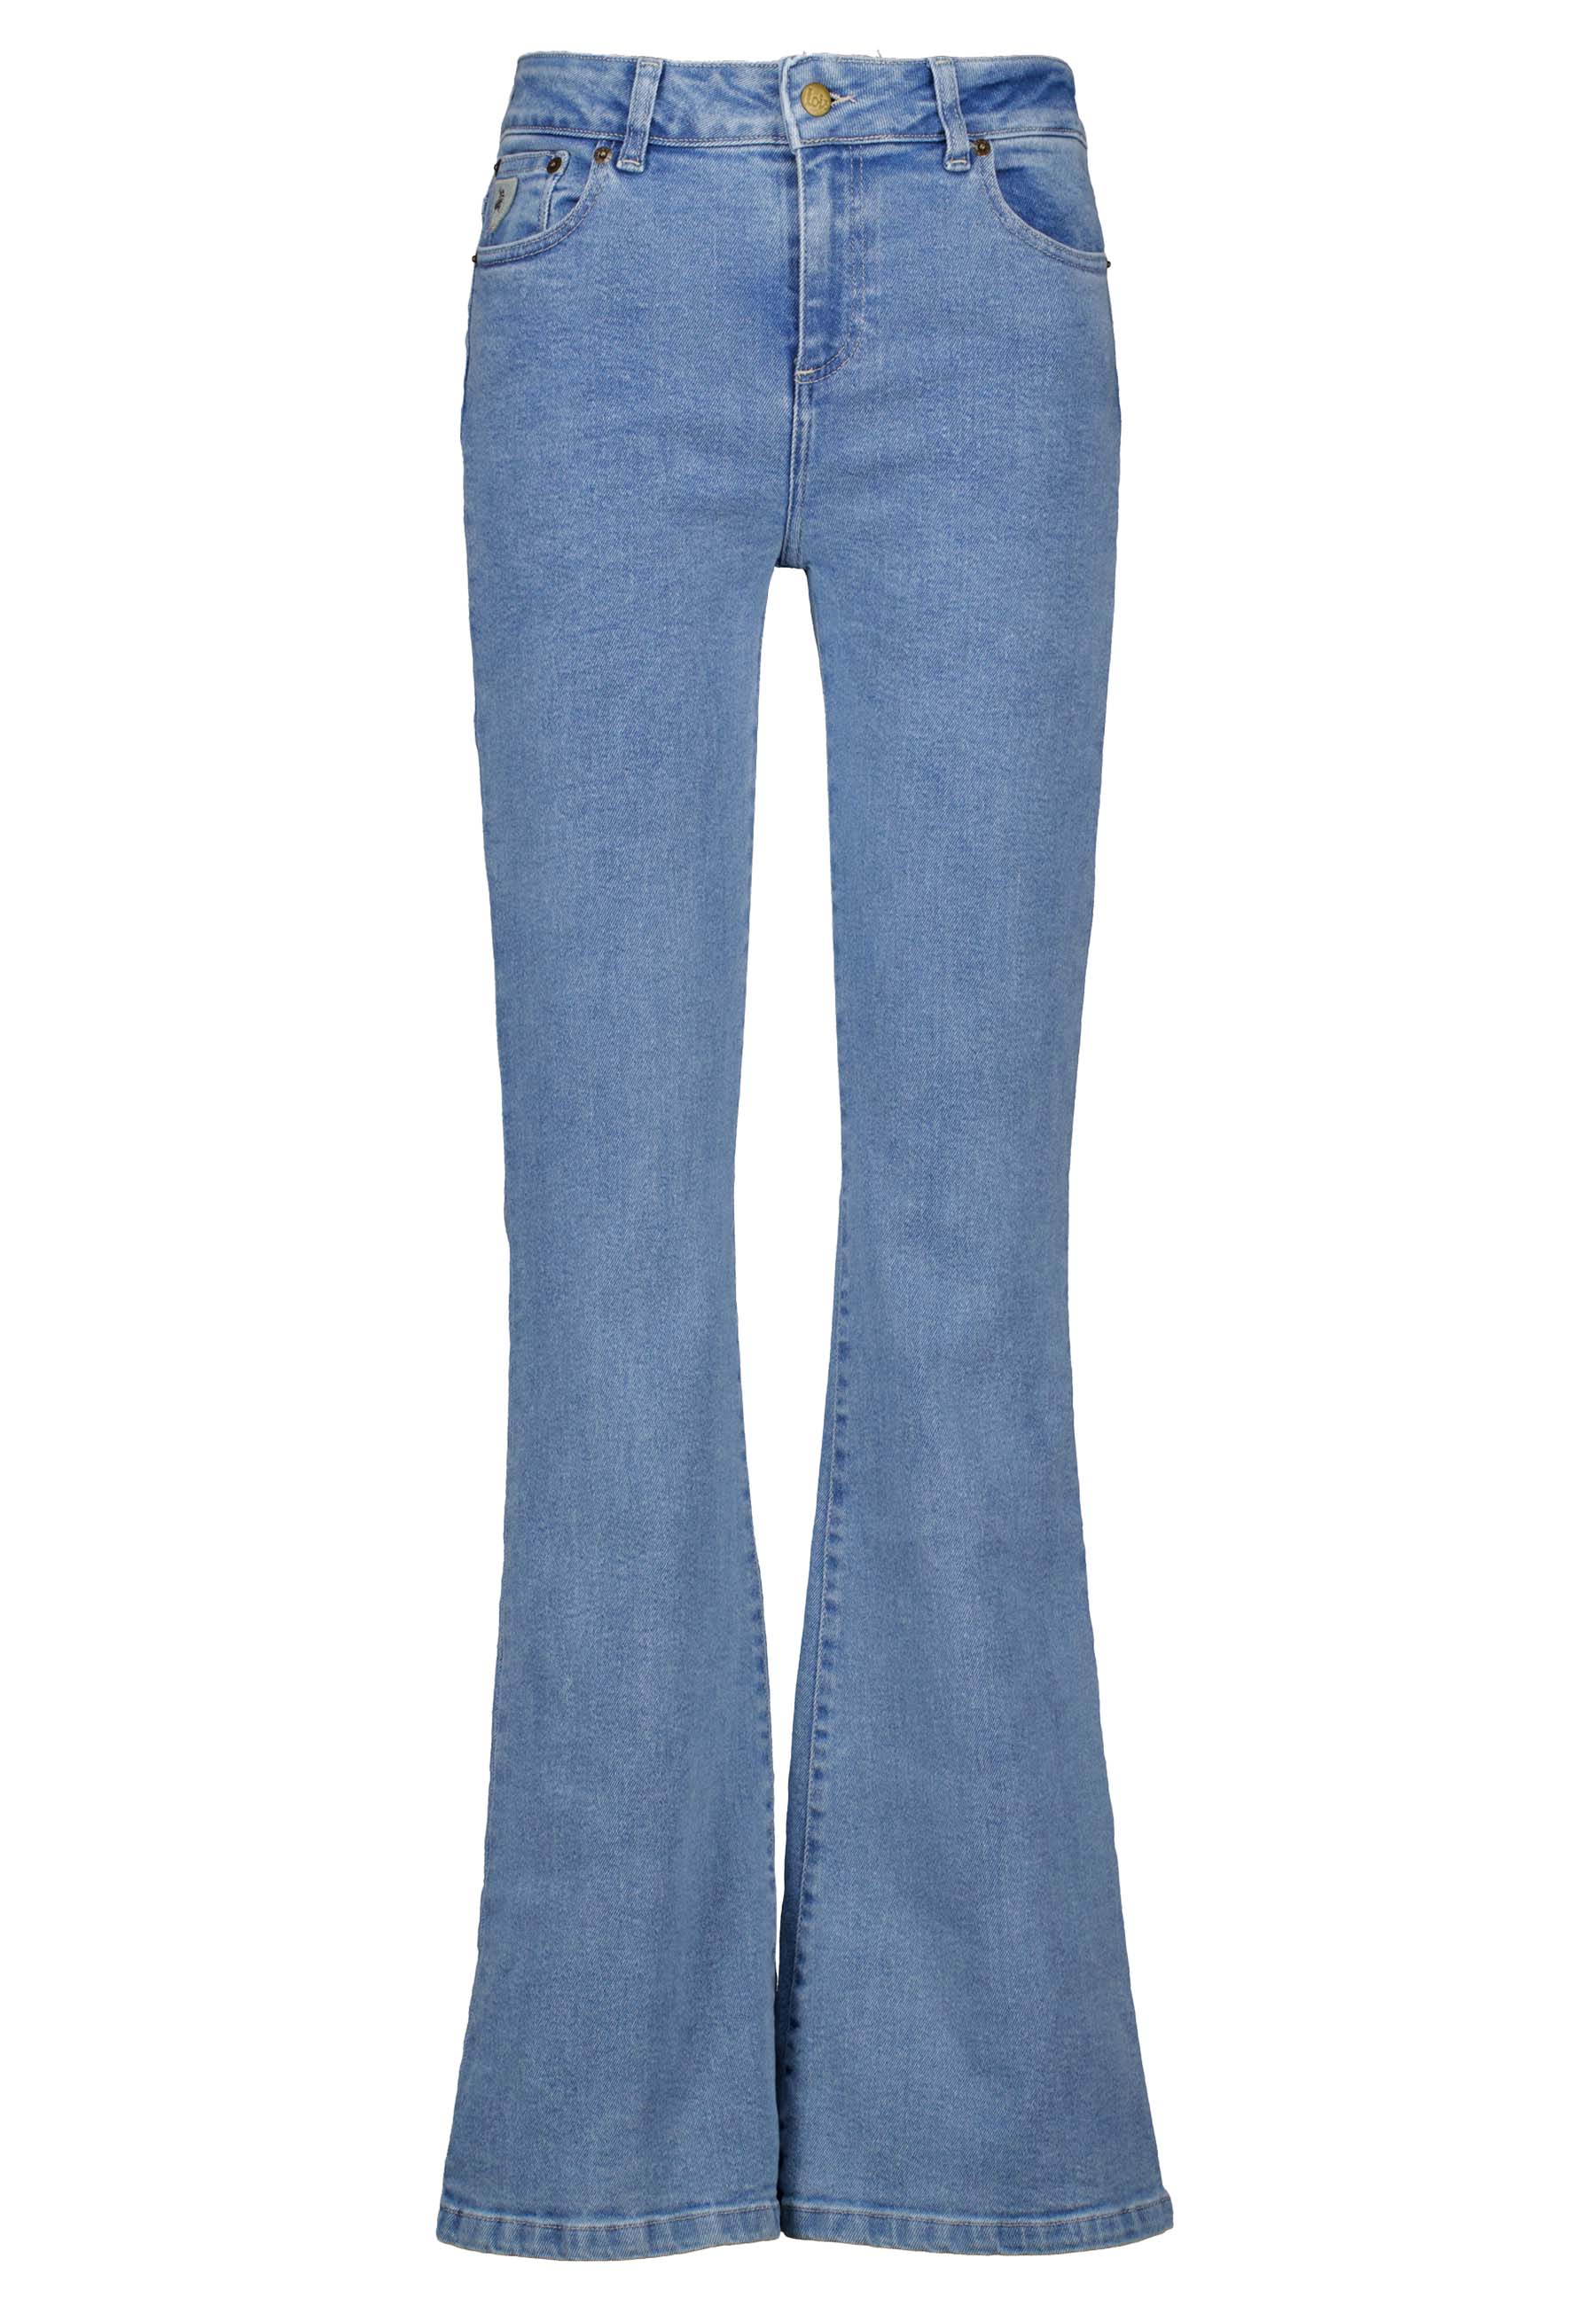 Lois jeans blauw Dames maat 32/32